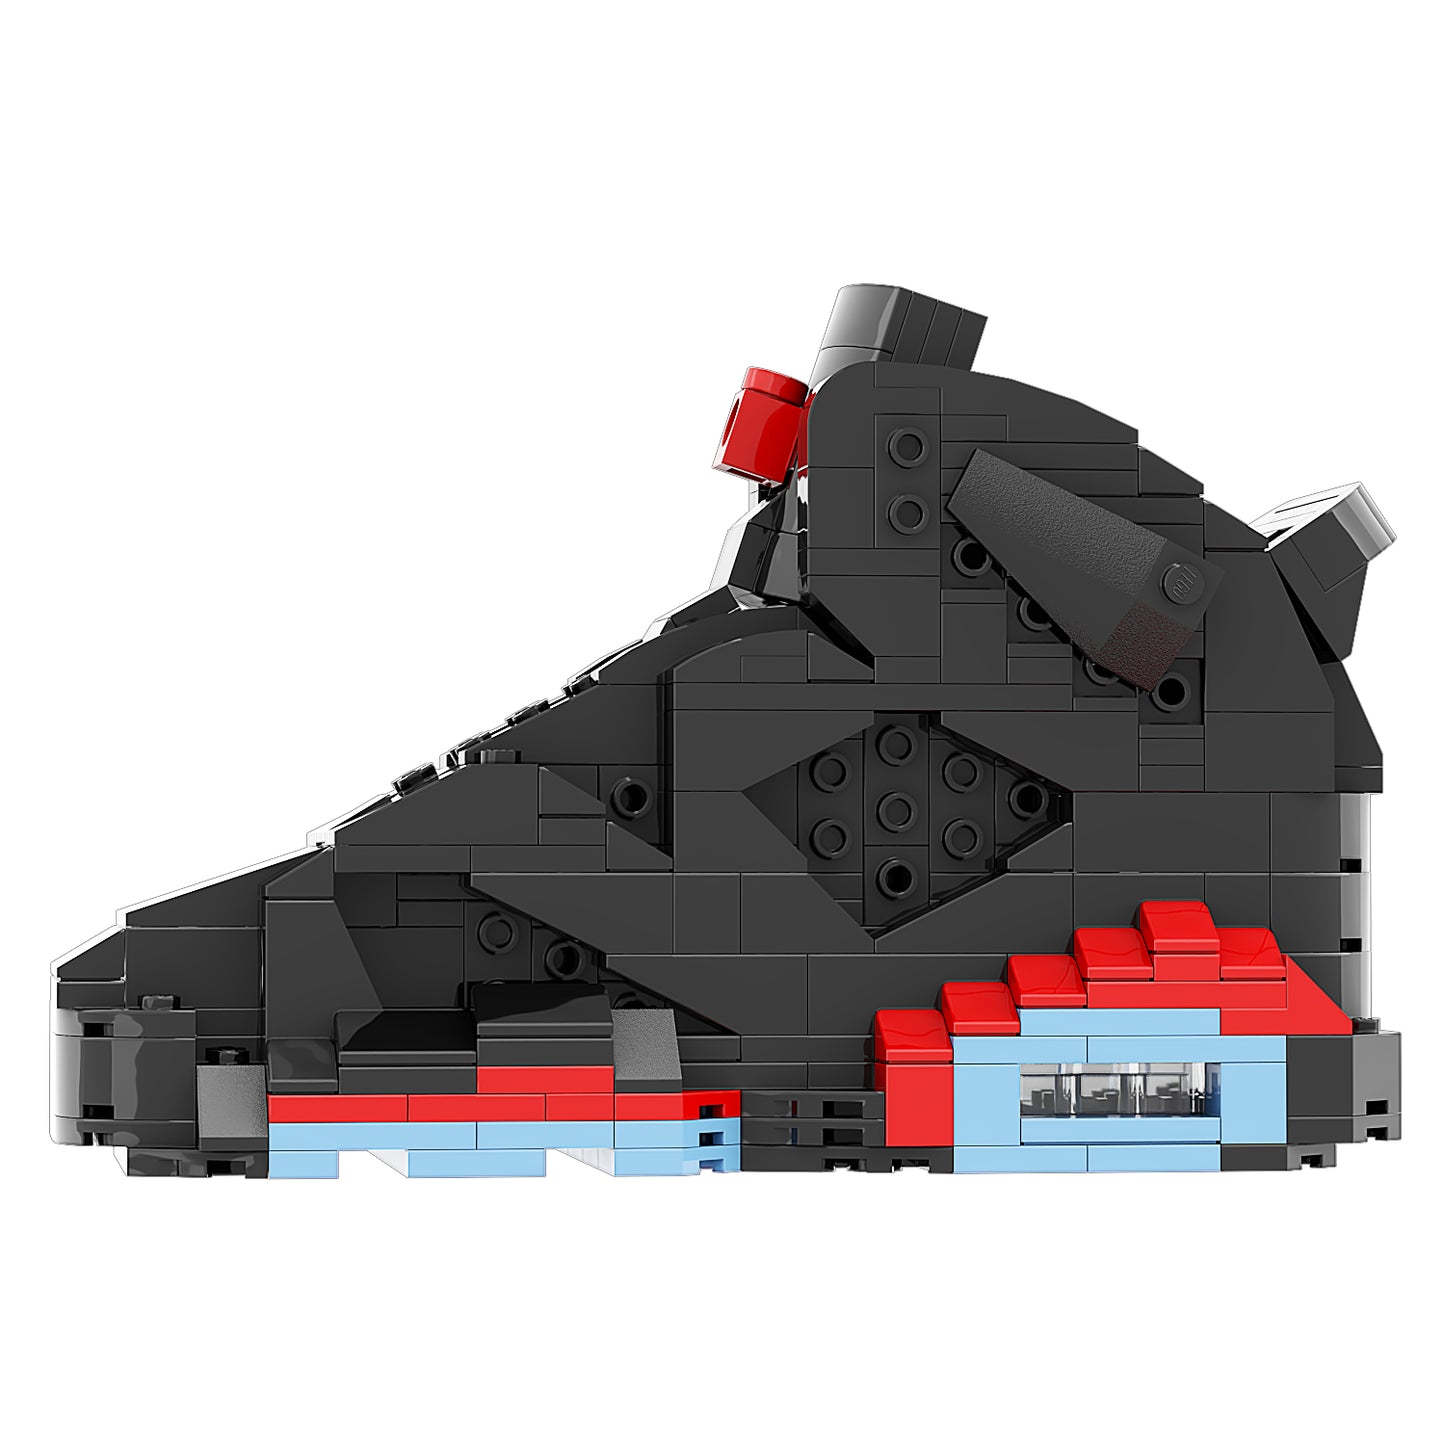 REGULAR AJ6 "infrared Red" Sneaker Bricks Sneaker with Mini Figure